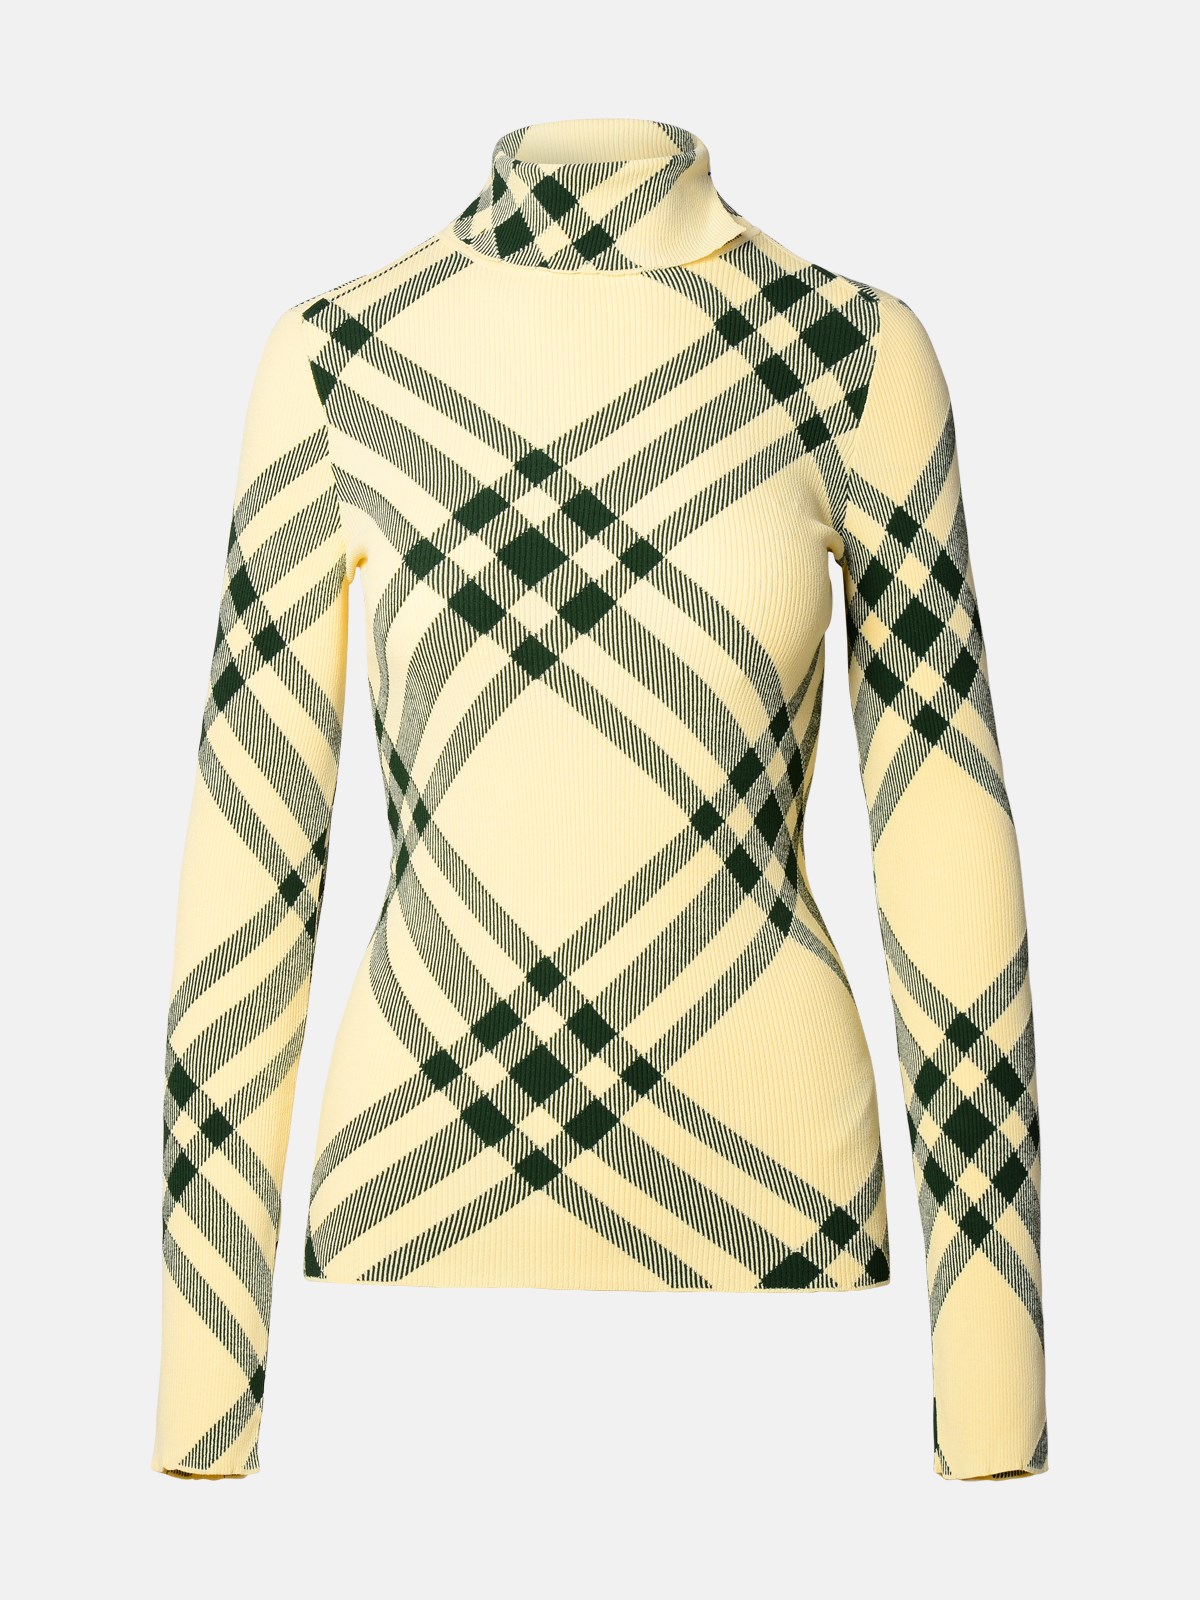 Burberry Ivory Viscose Blend Turtleneck Sweater